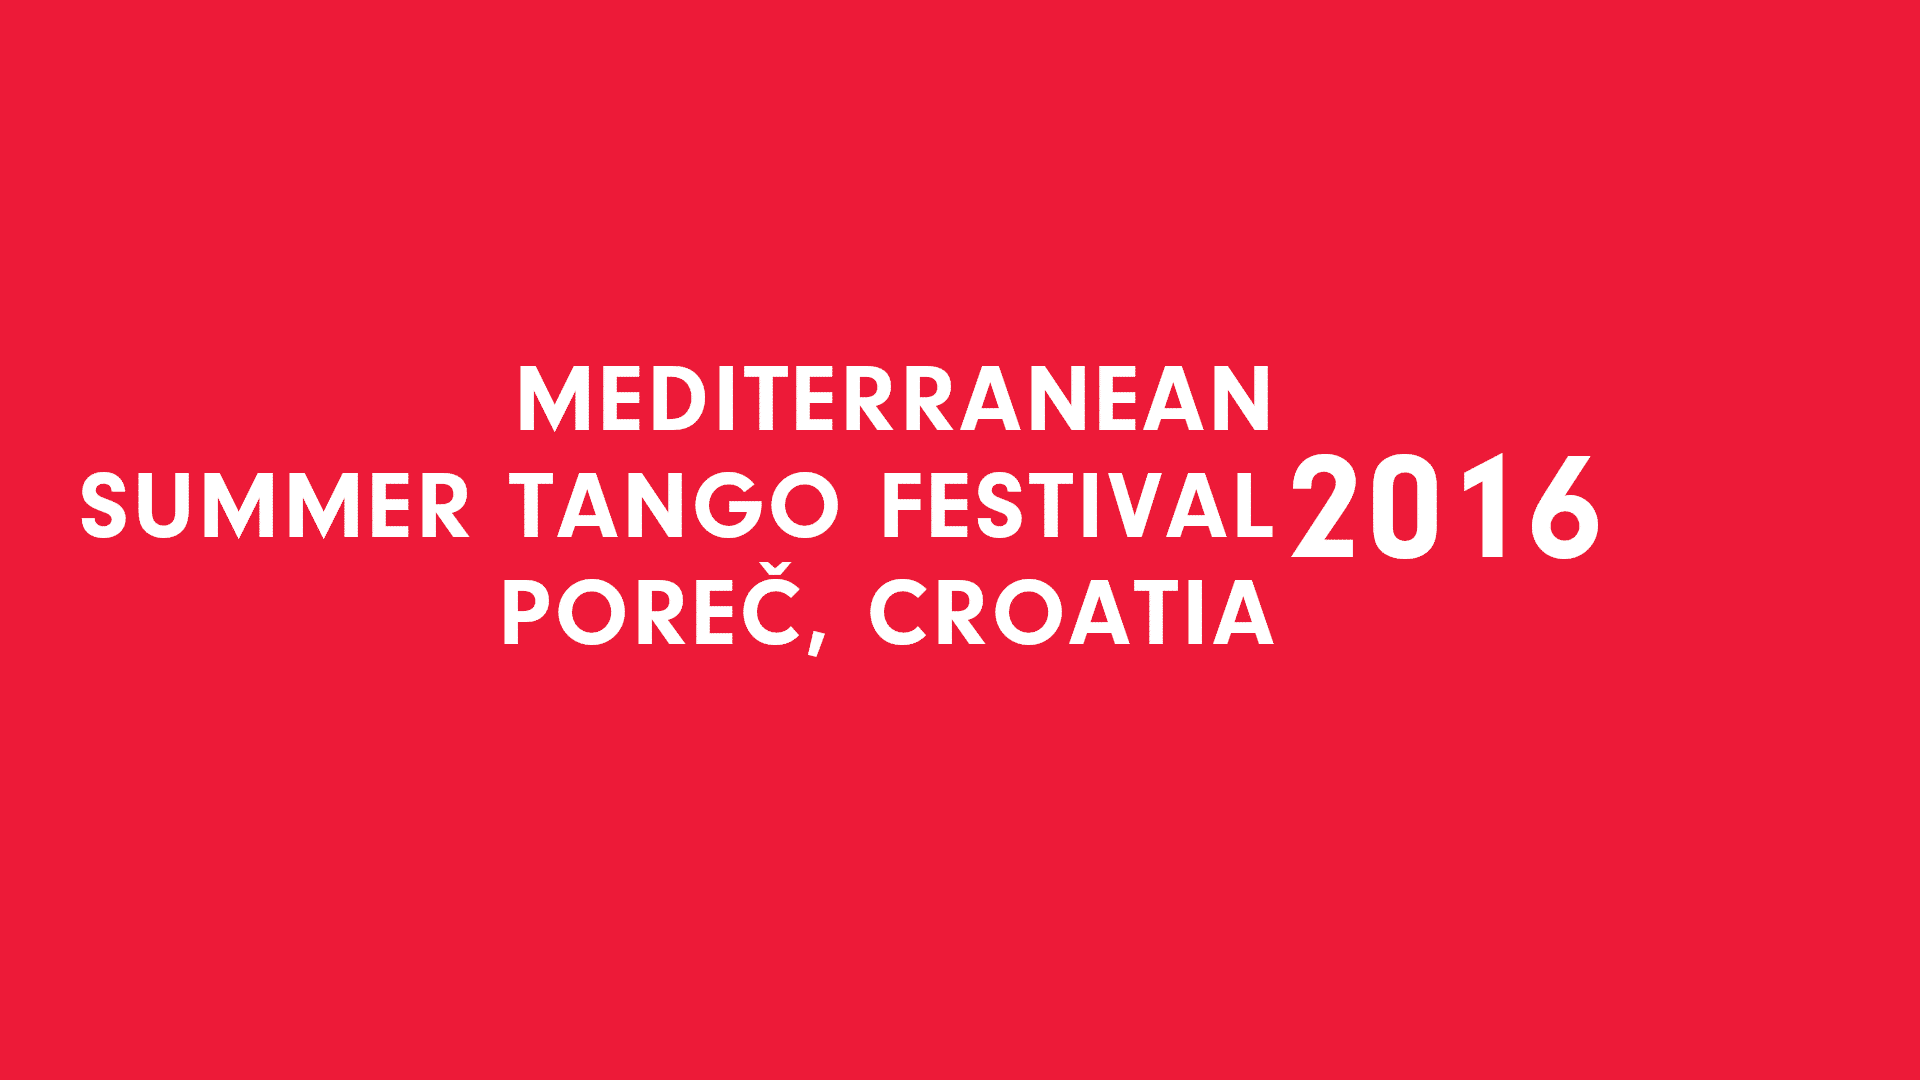 Mediterranean Summer Tango Festival 2016 event picture